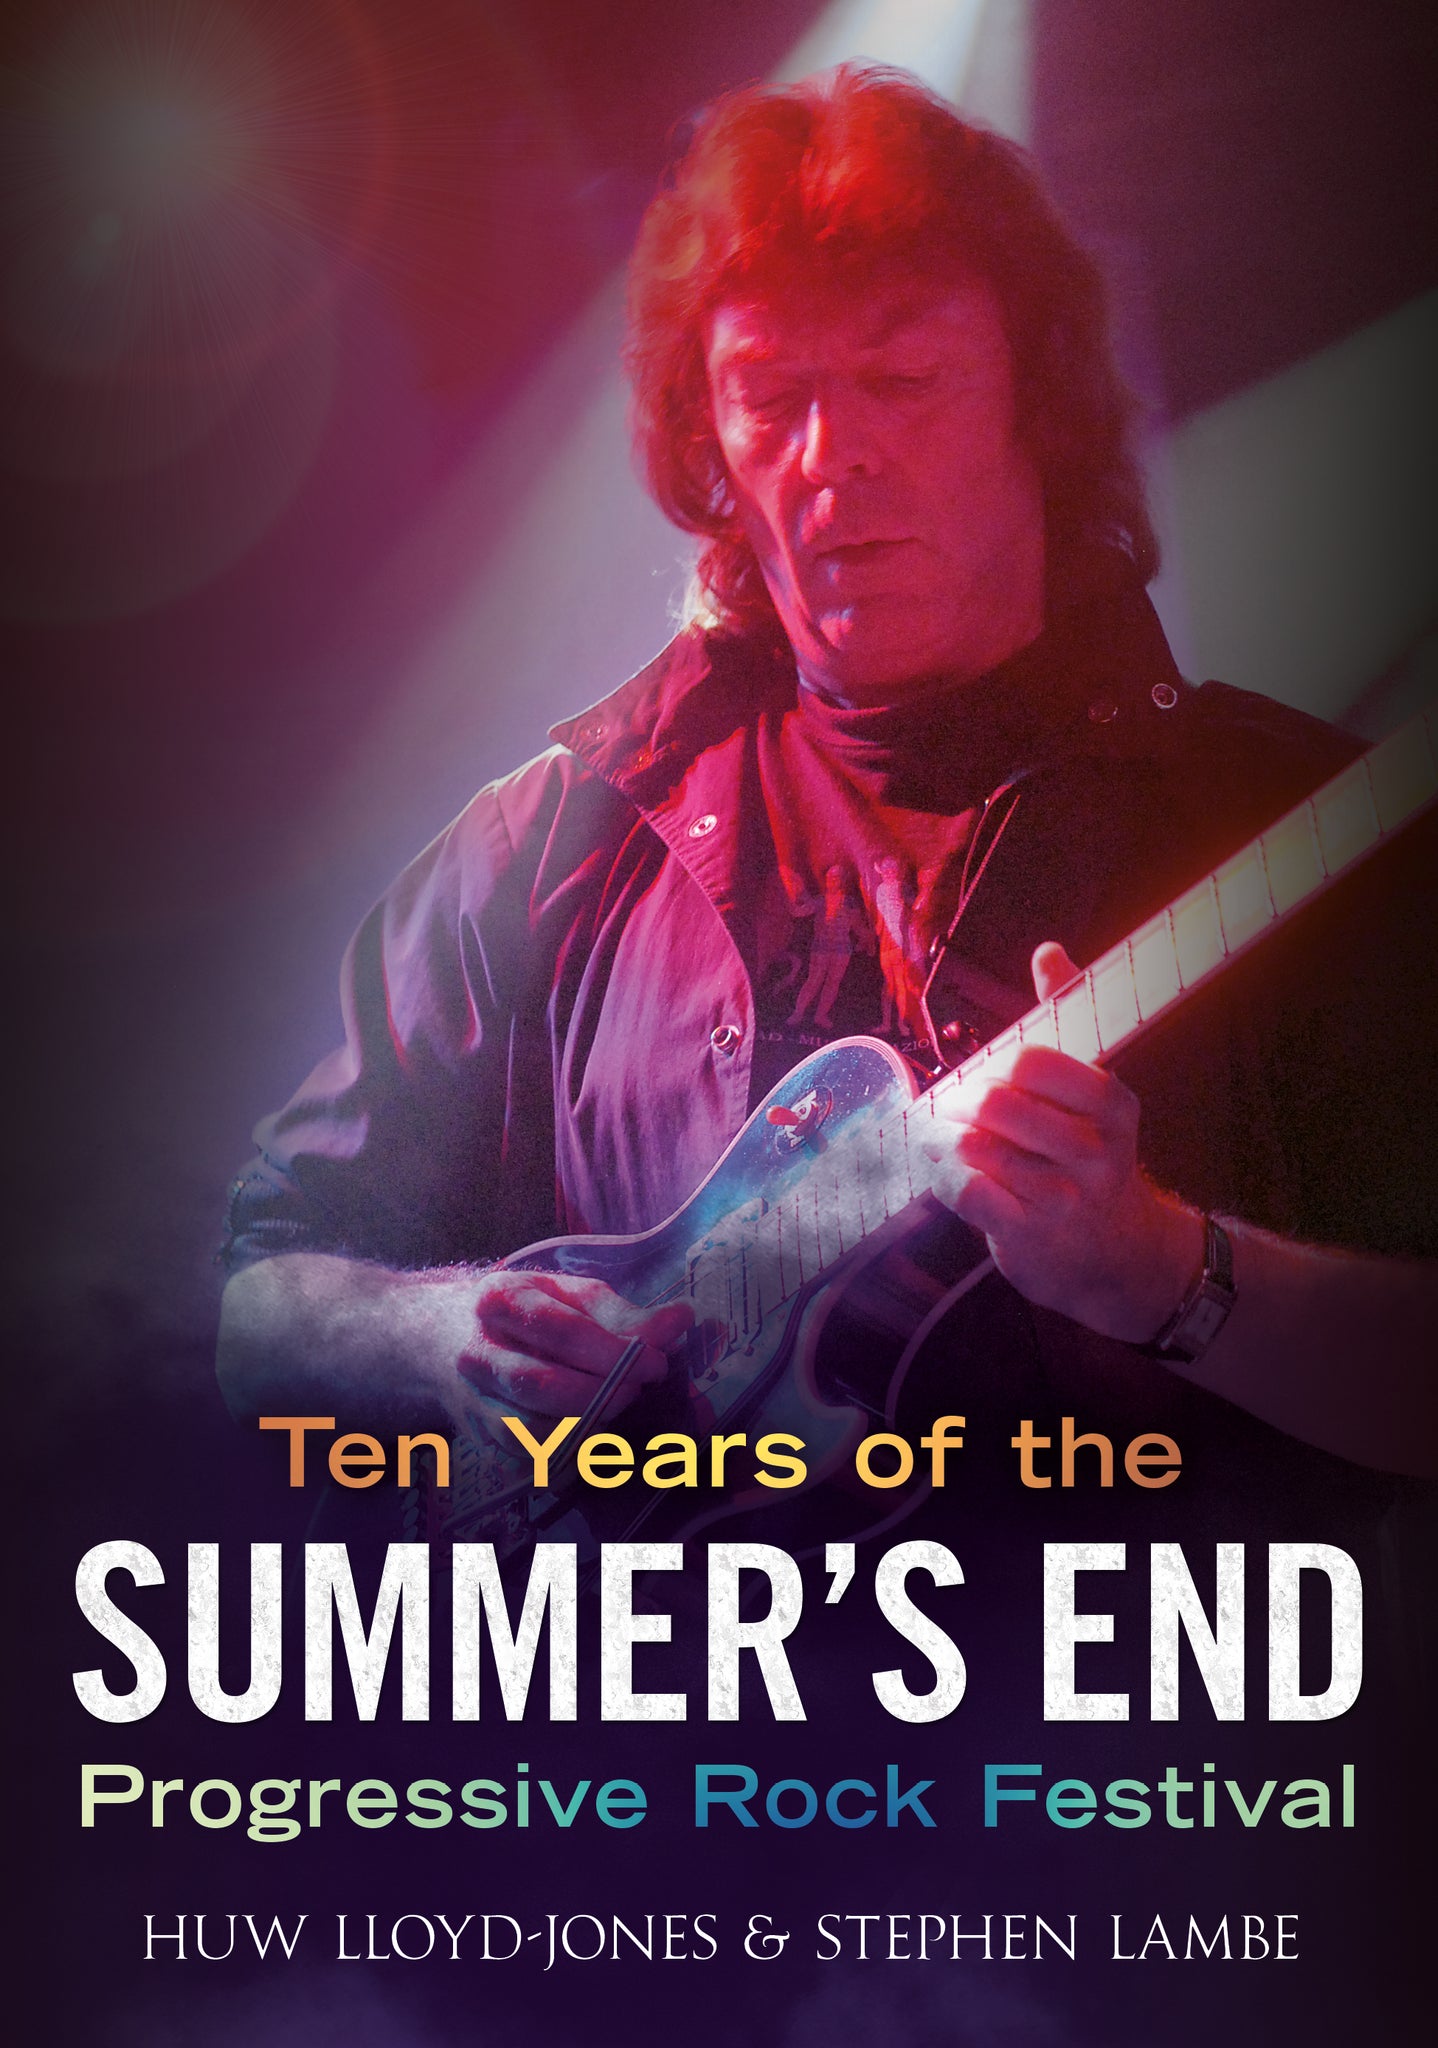 Ten Years of the Summer’s End Progressive Rock Festival